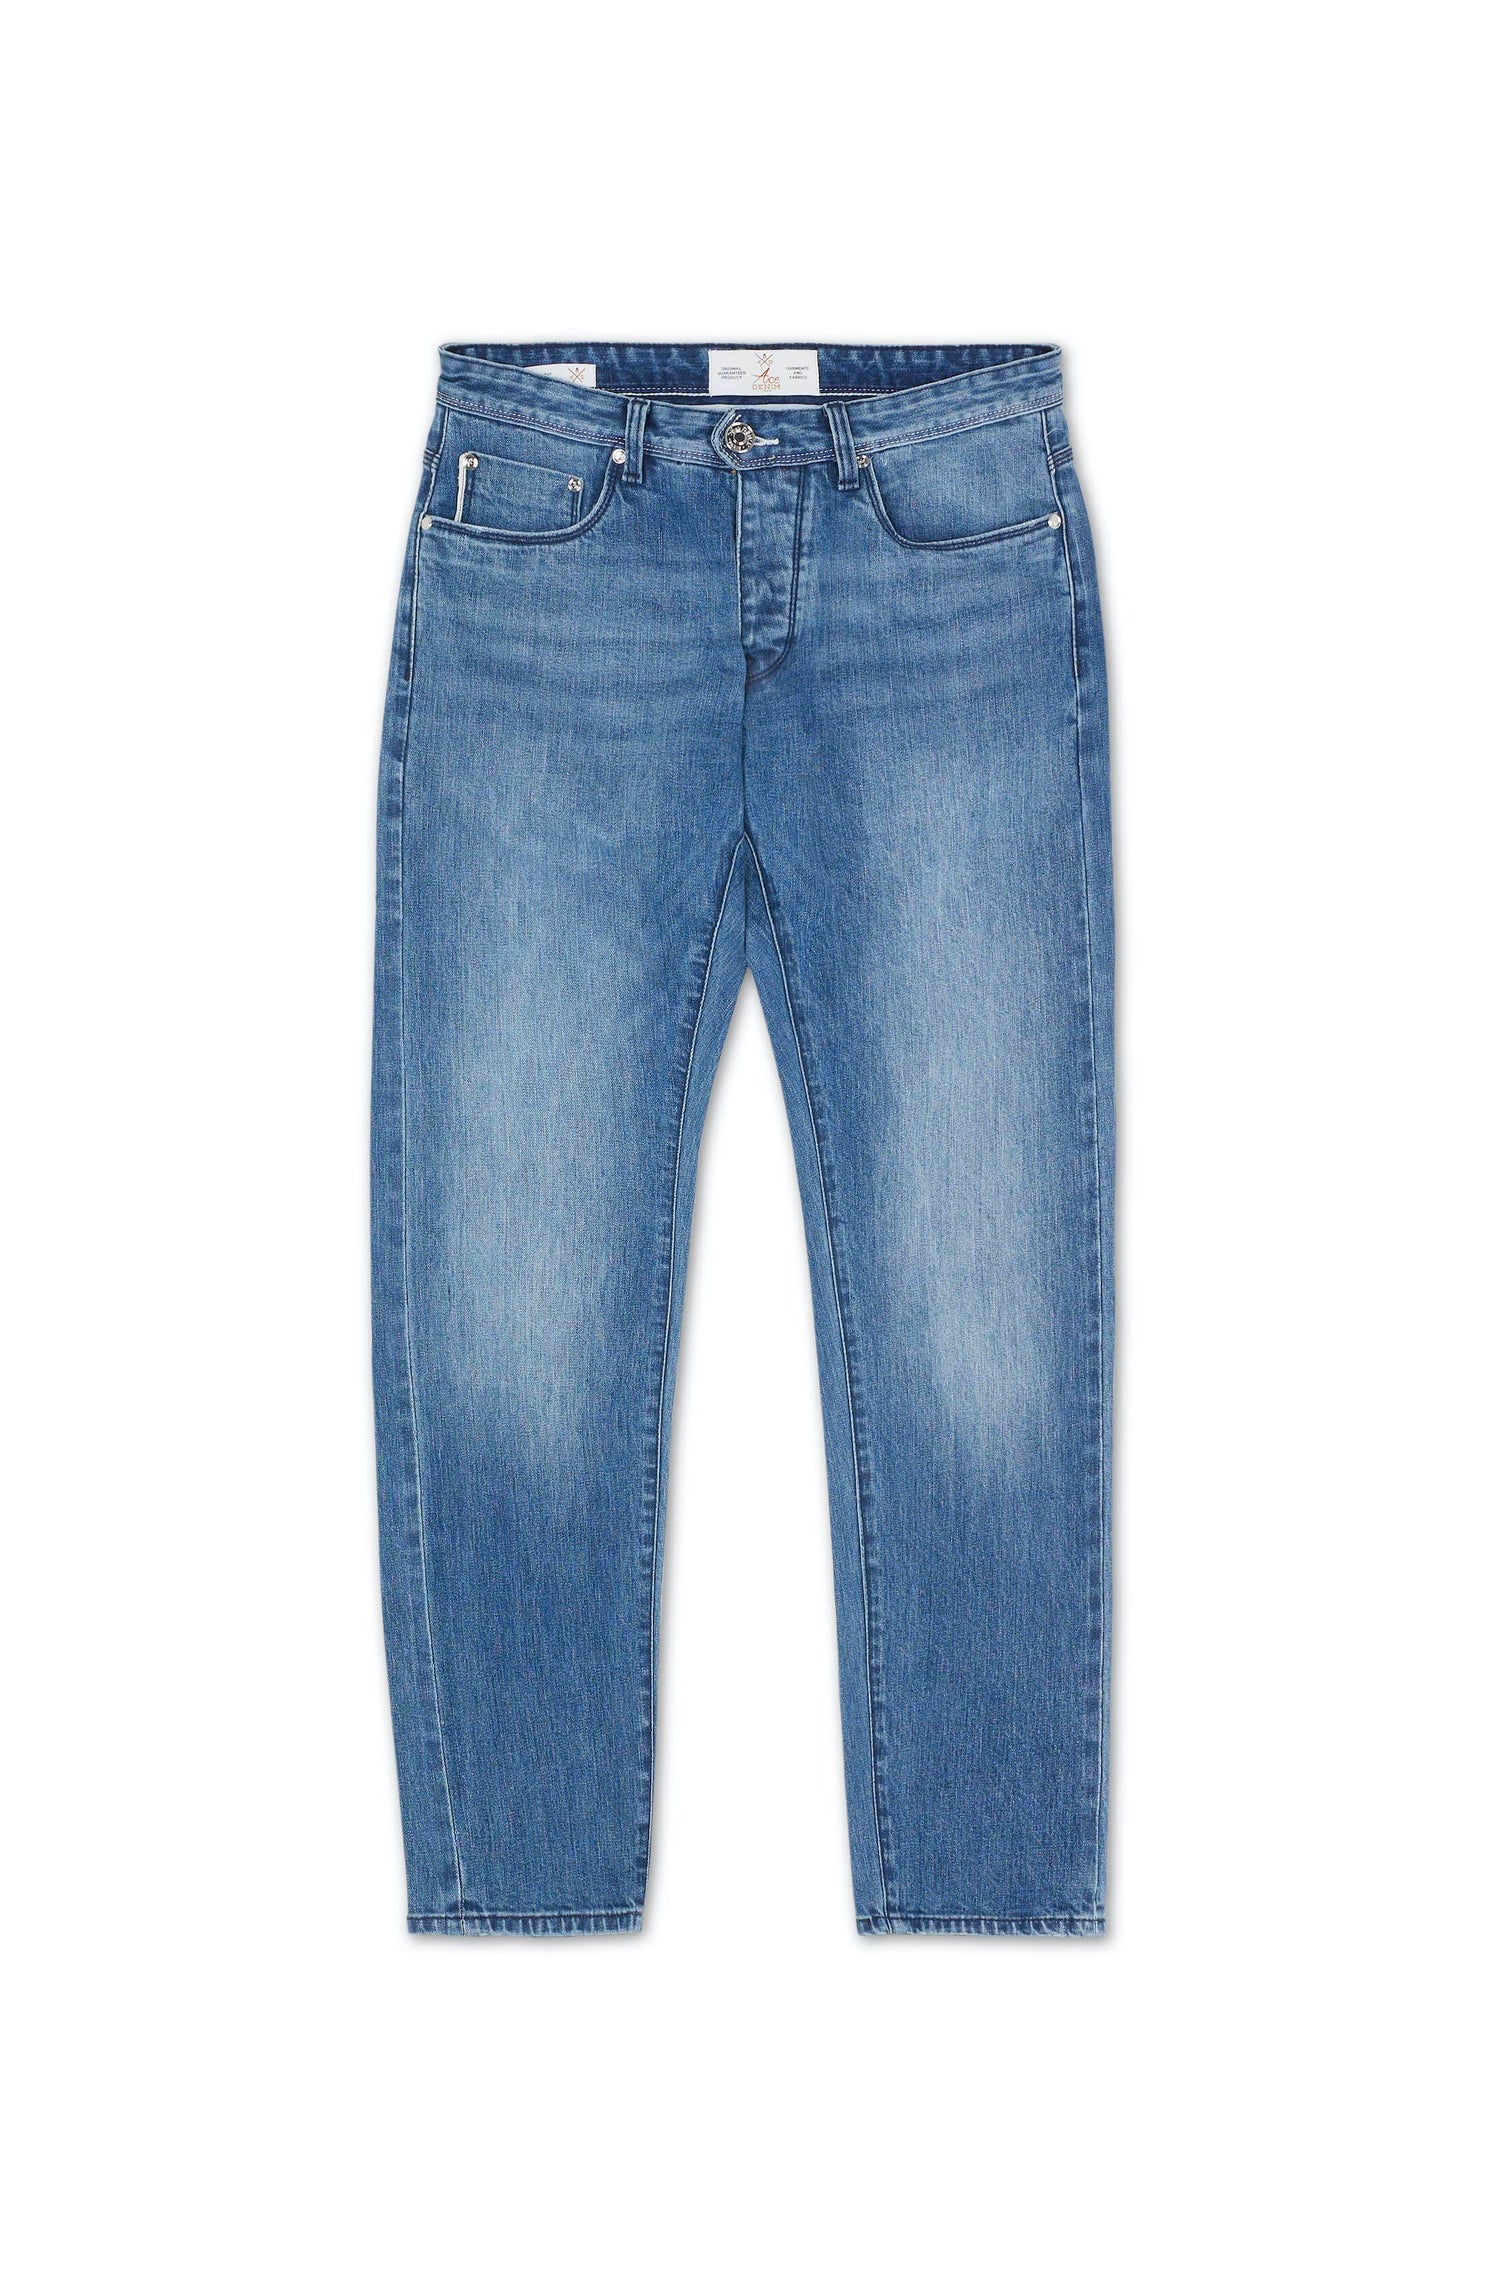 jeans homme bleu indigo coupe slim toile selvedge